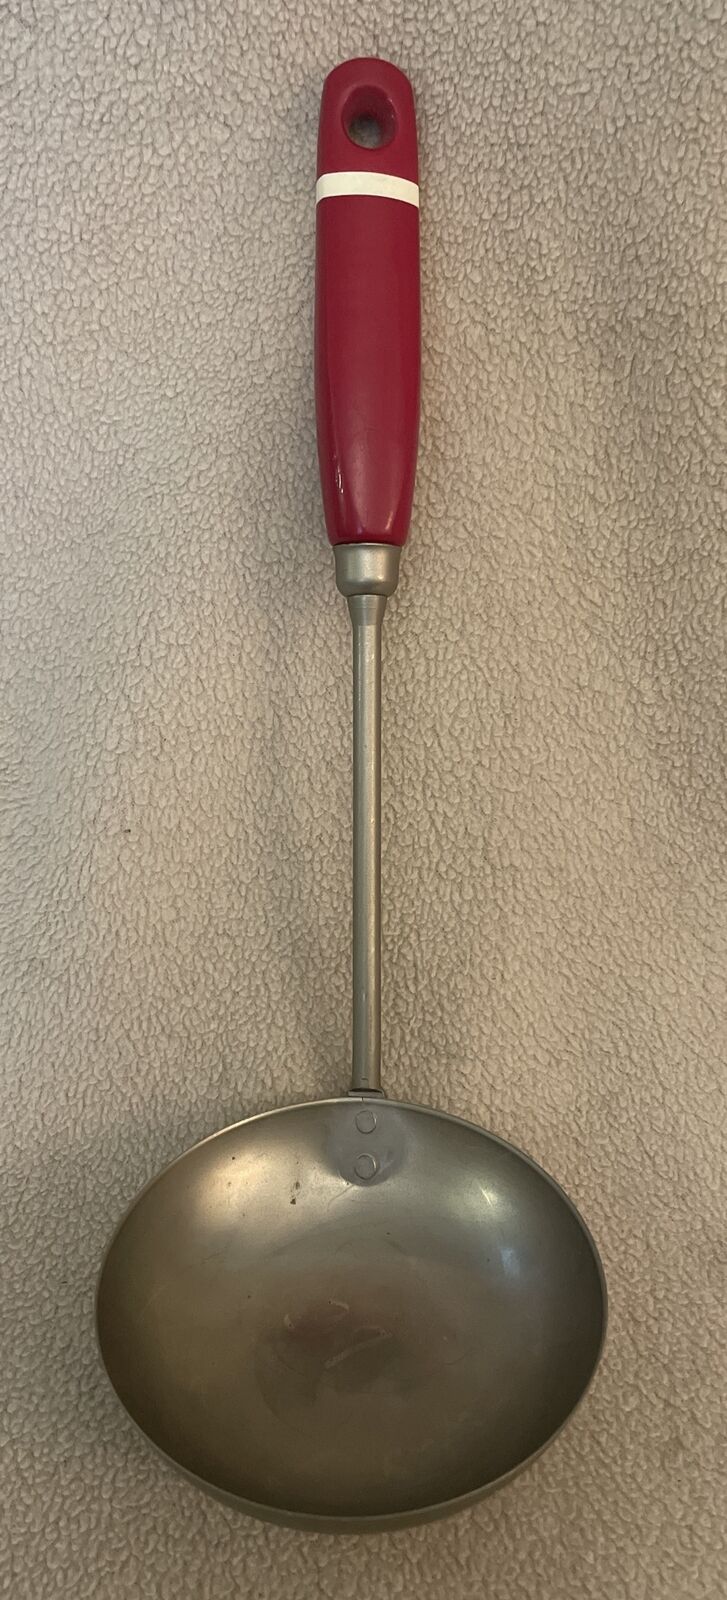 NOS Vintage EKCO Red & White Stripe Wooden Handle Serving Ladle/Spoon USA